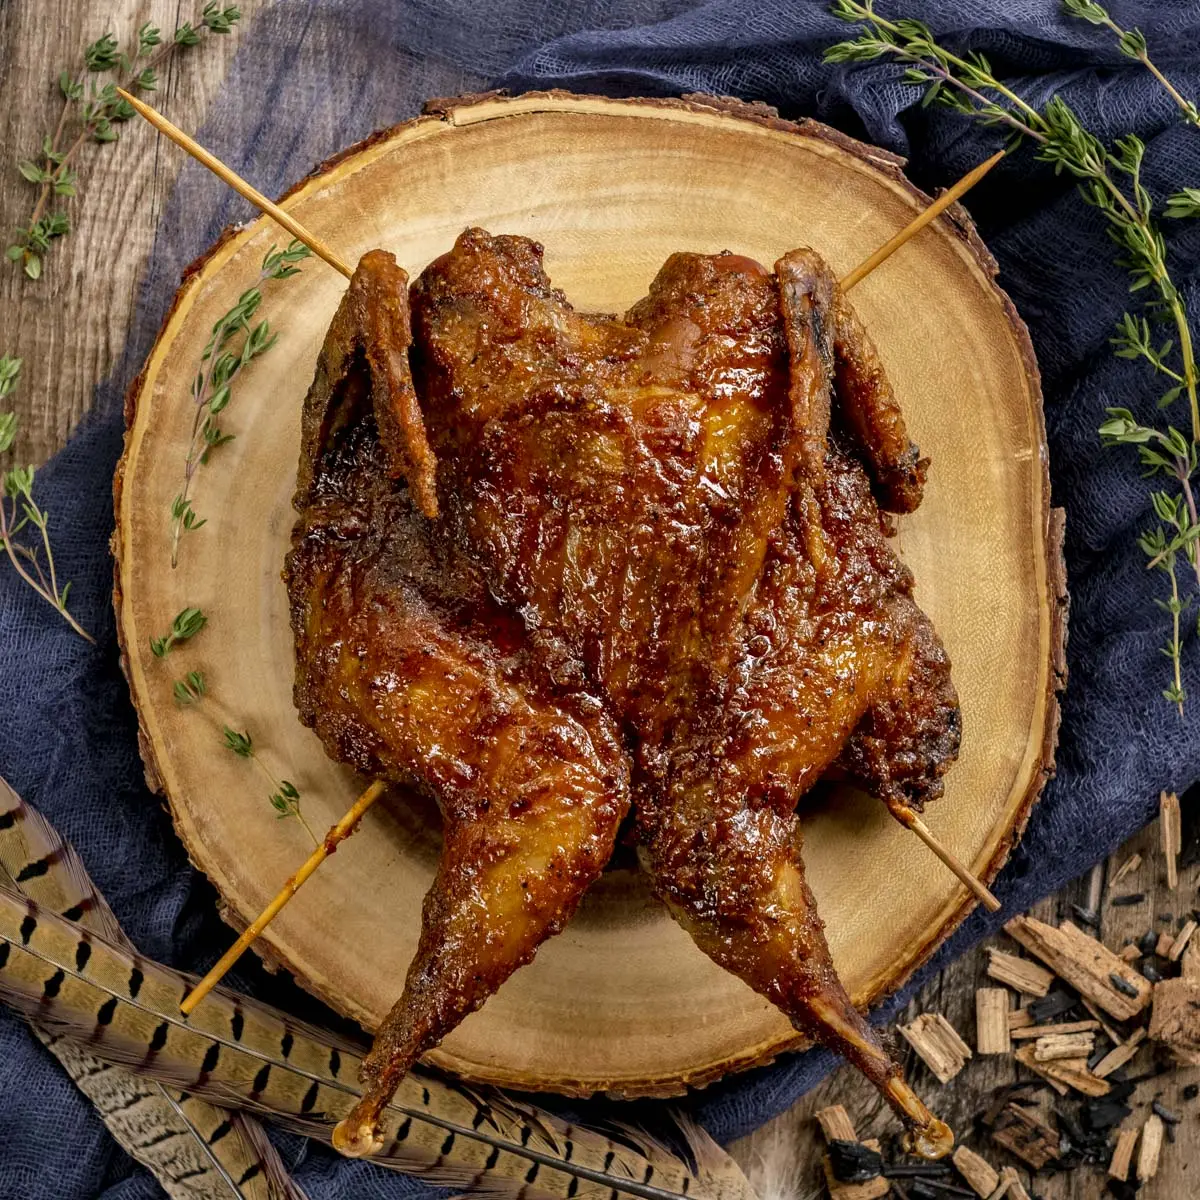 brine for smoked pheasant breast - Should I brine pheasant before freezing